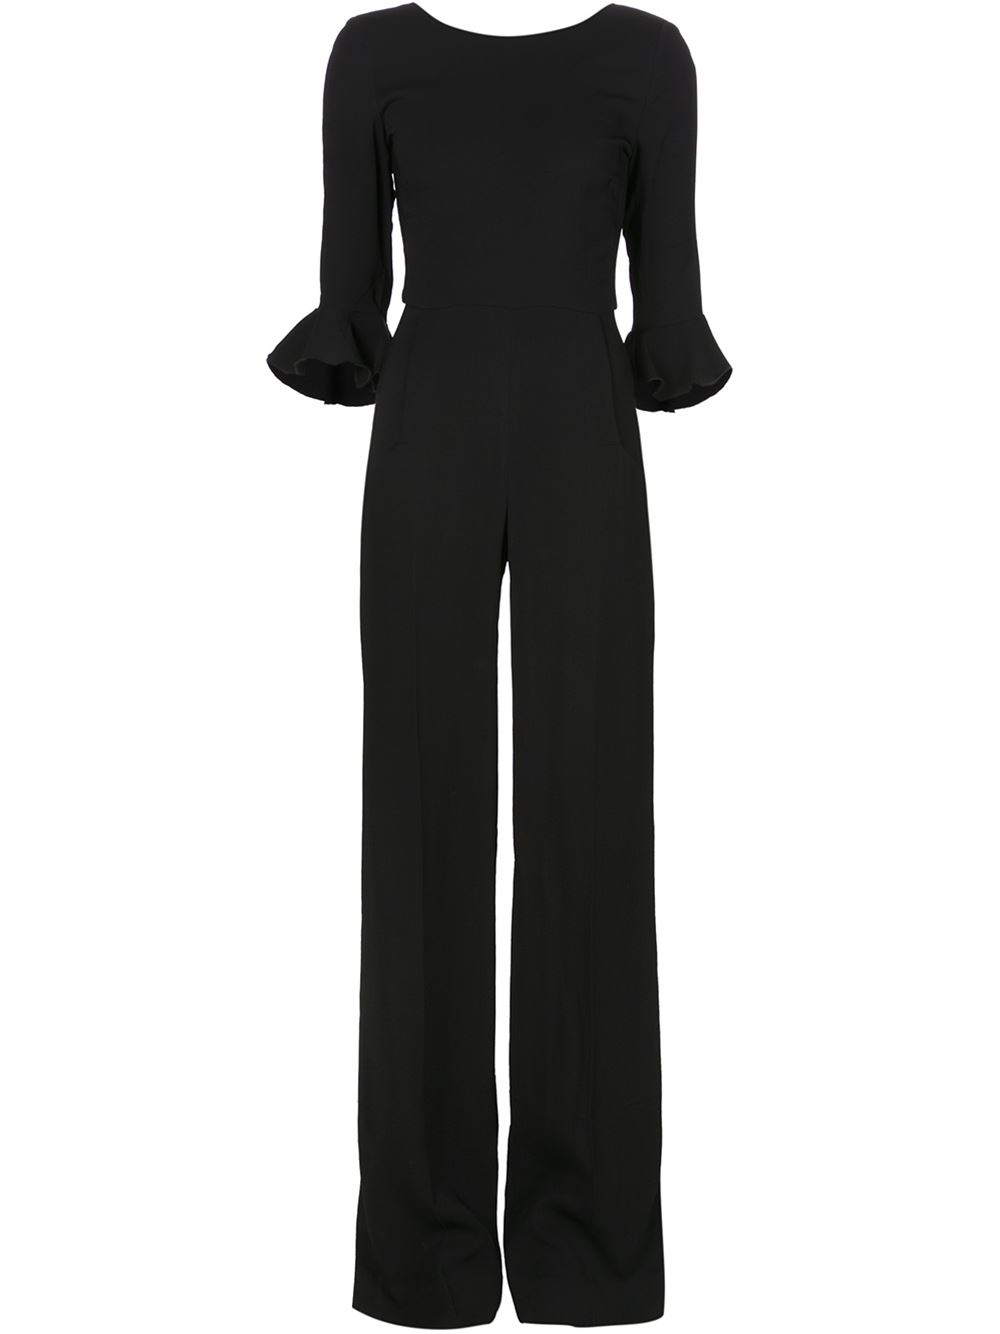 Lyst - Saloni Bell Three-quarter Length Sleeve Jumpsuit in Black